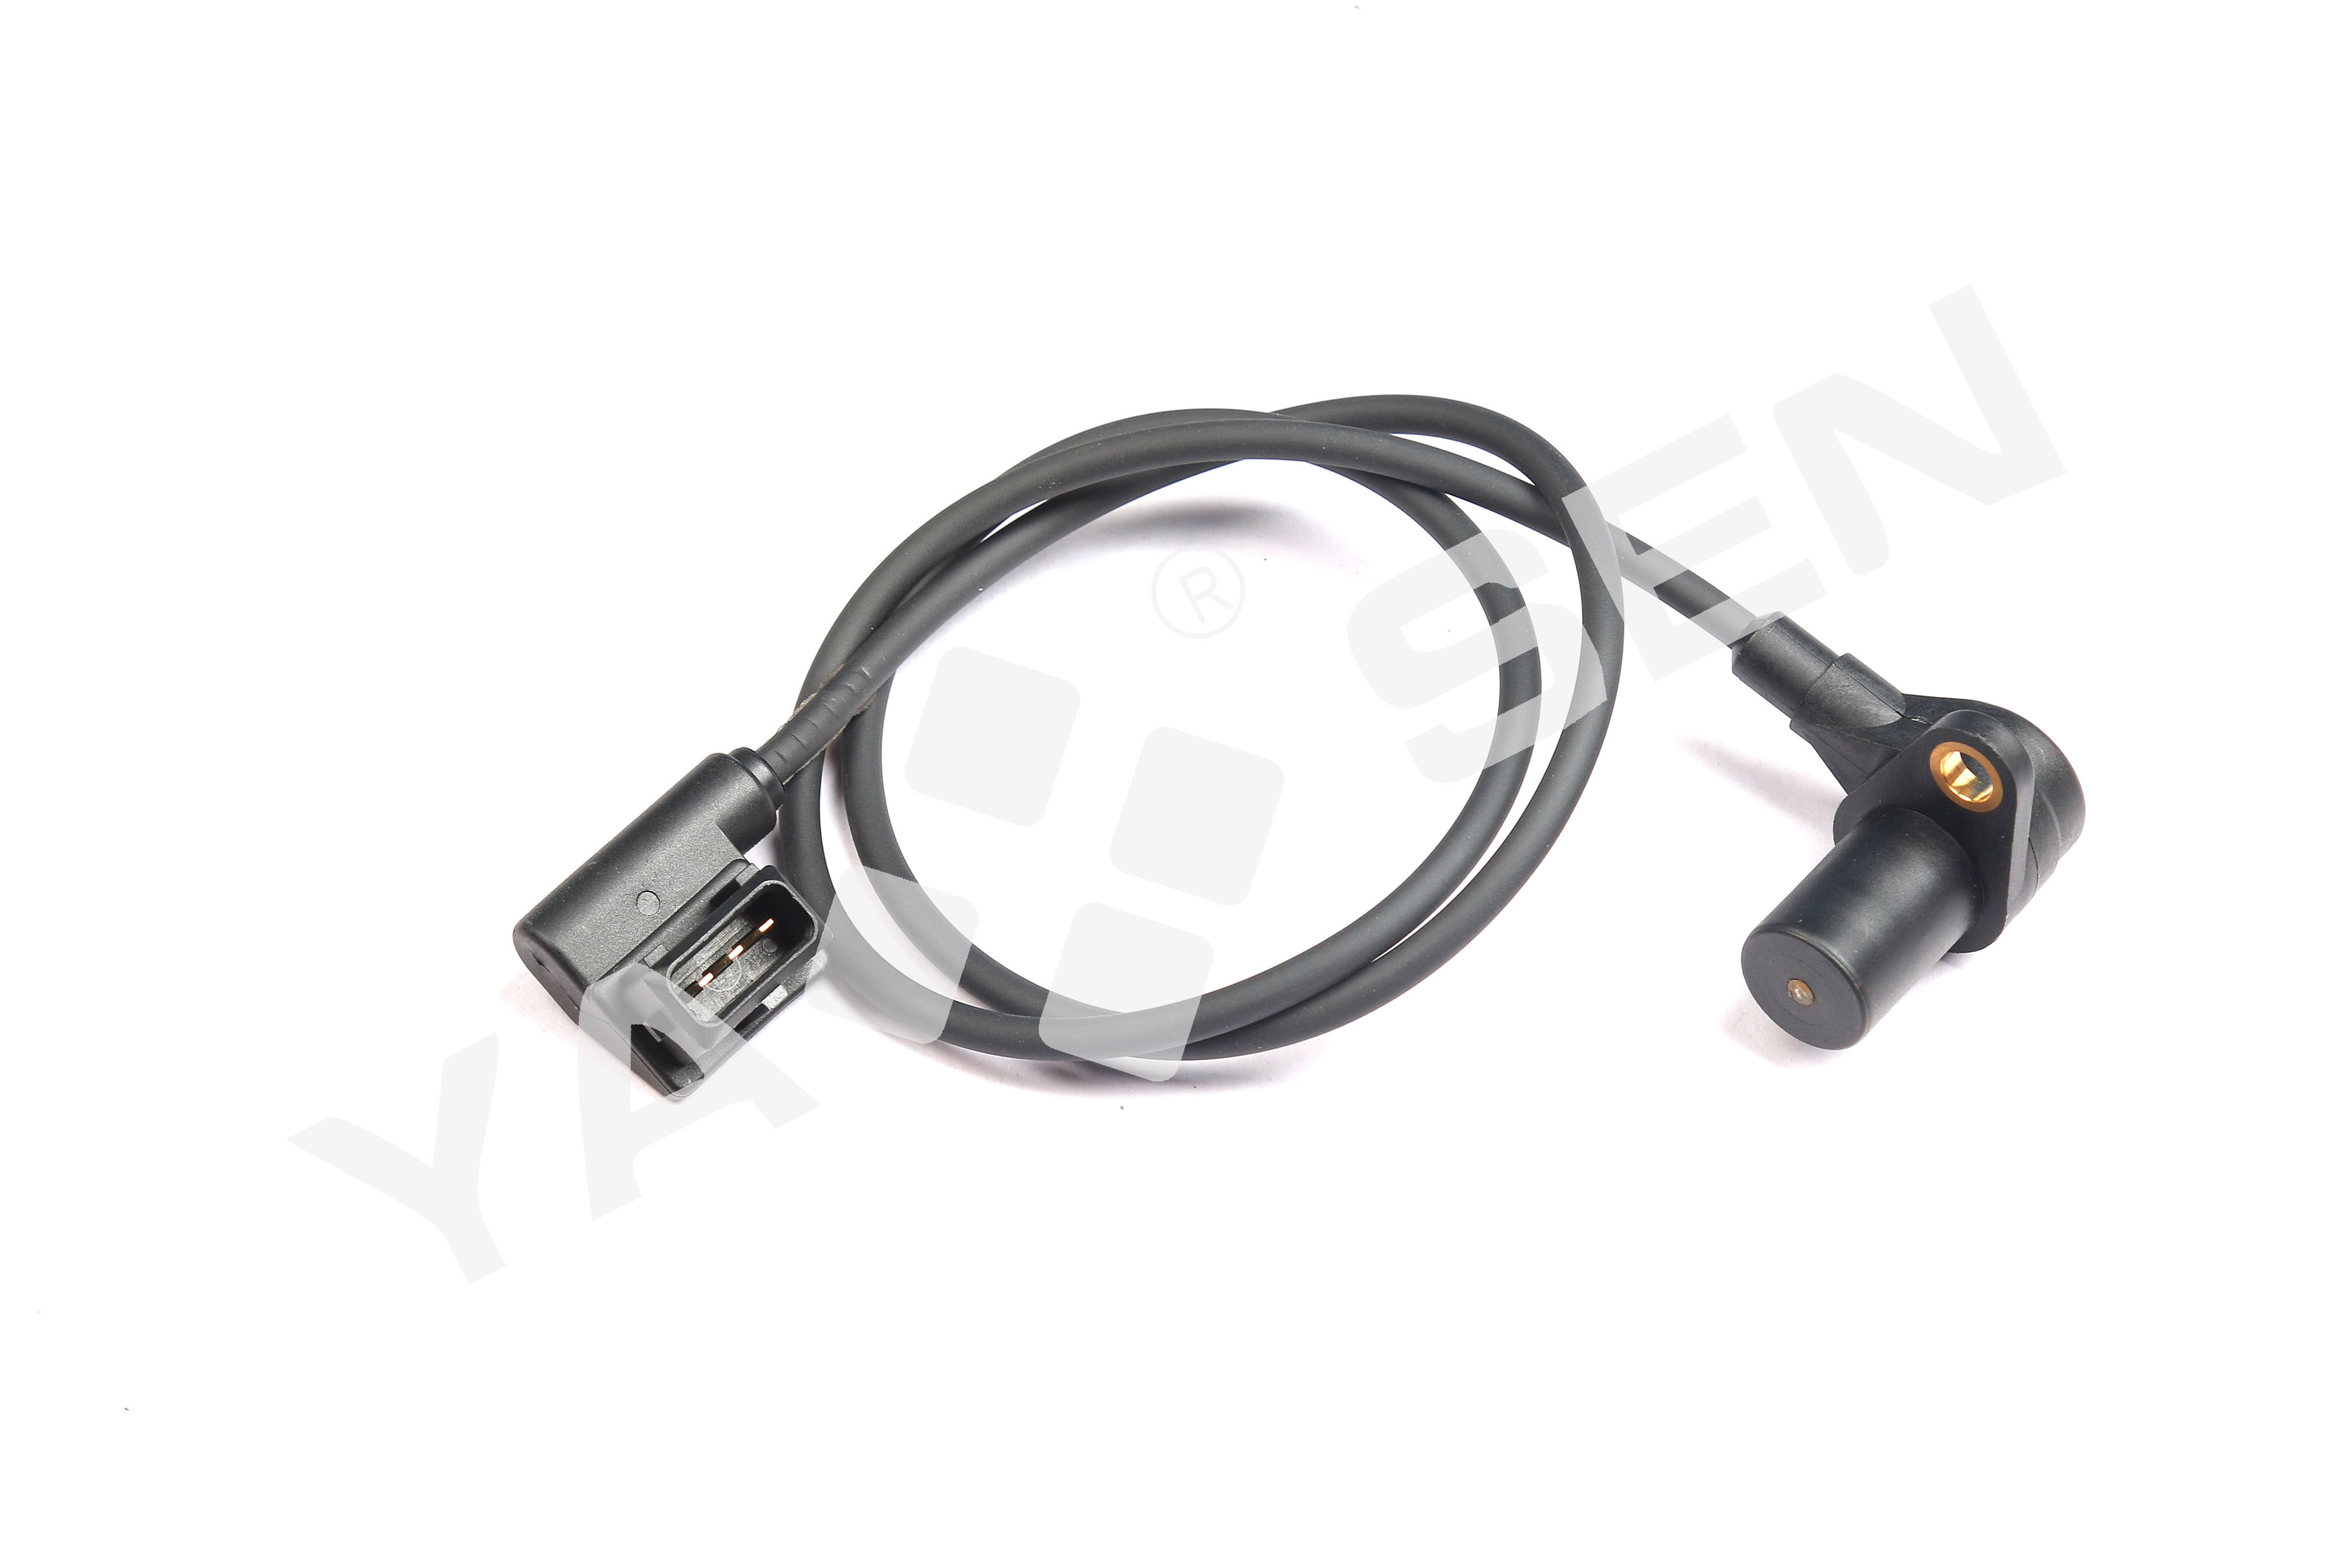 Crankshaft Position Sensor for BMW, 12141739886 7517146  0902190  XREV382  18829  CS1034  EPS121  501533 6PU009110591